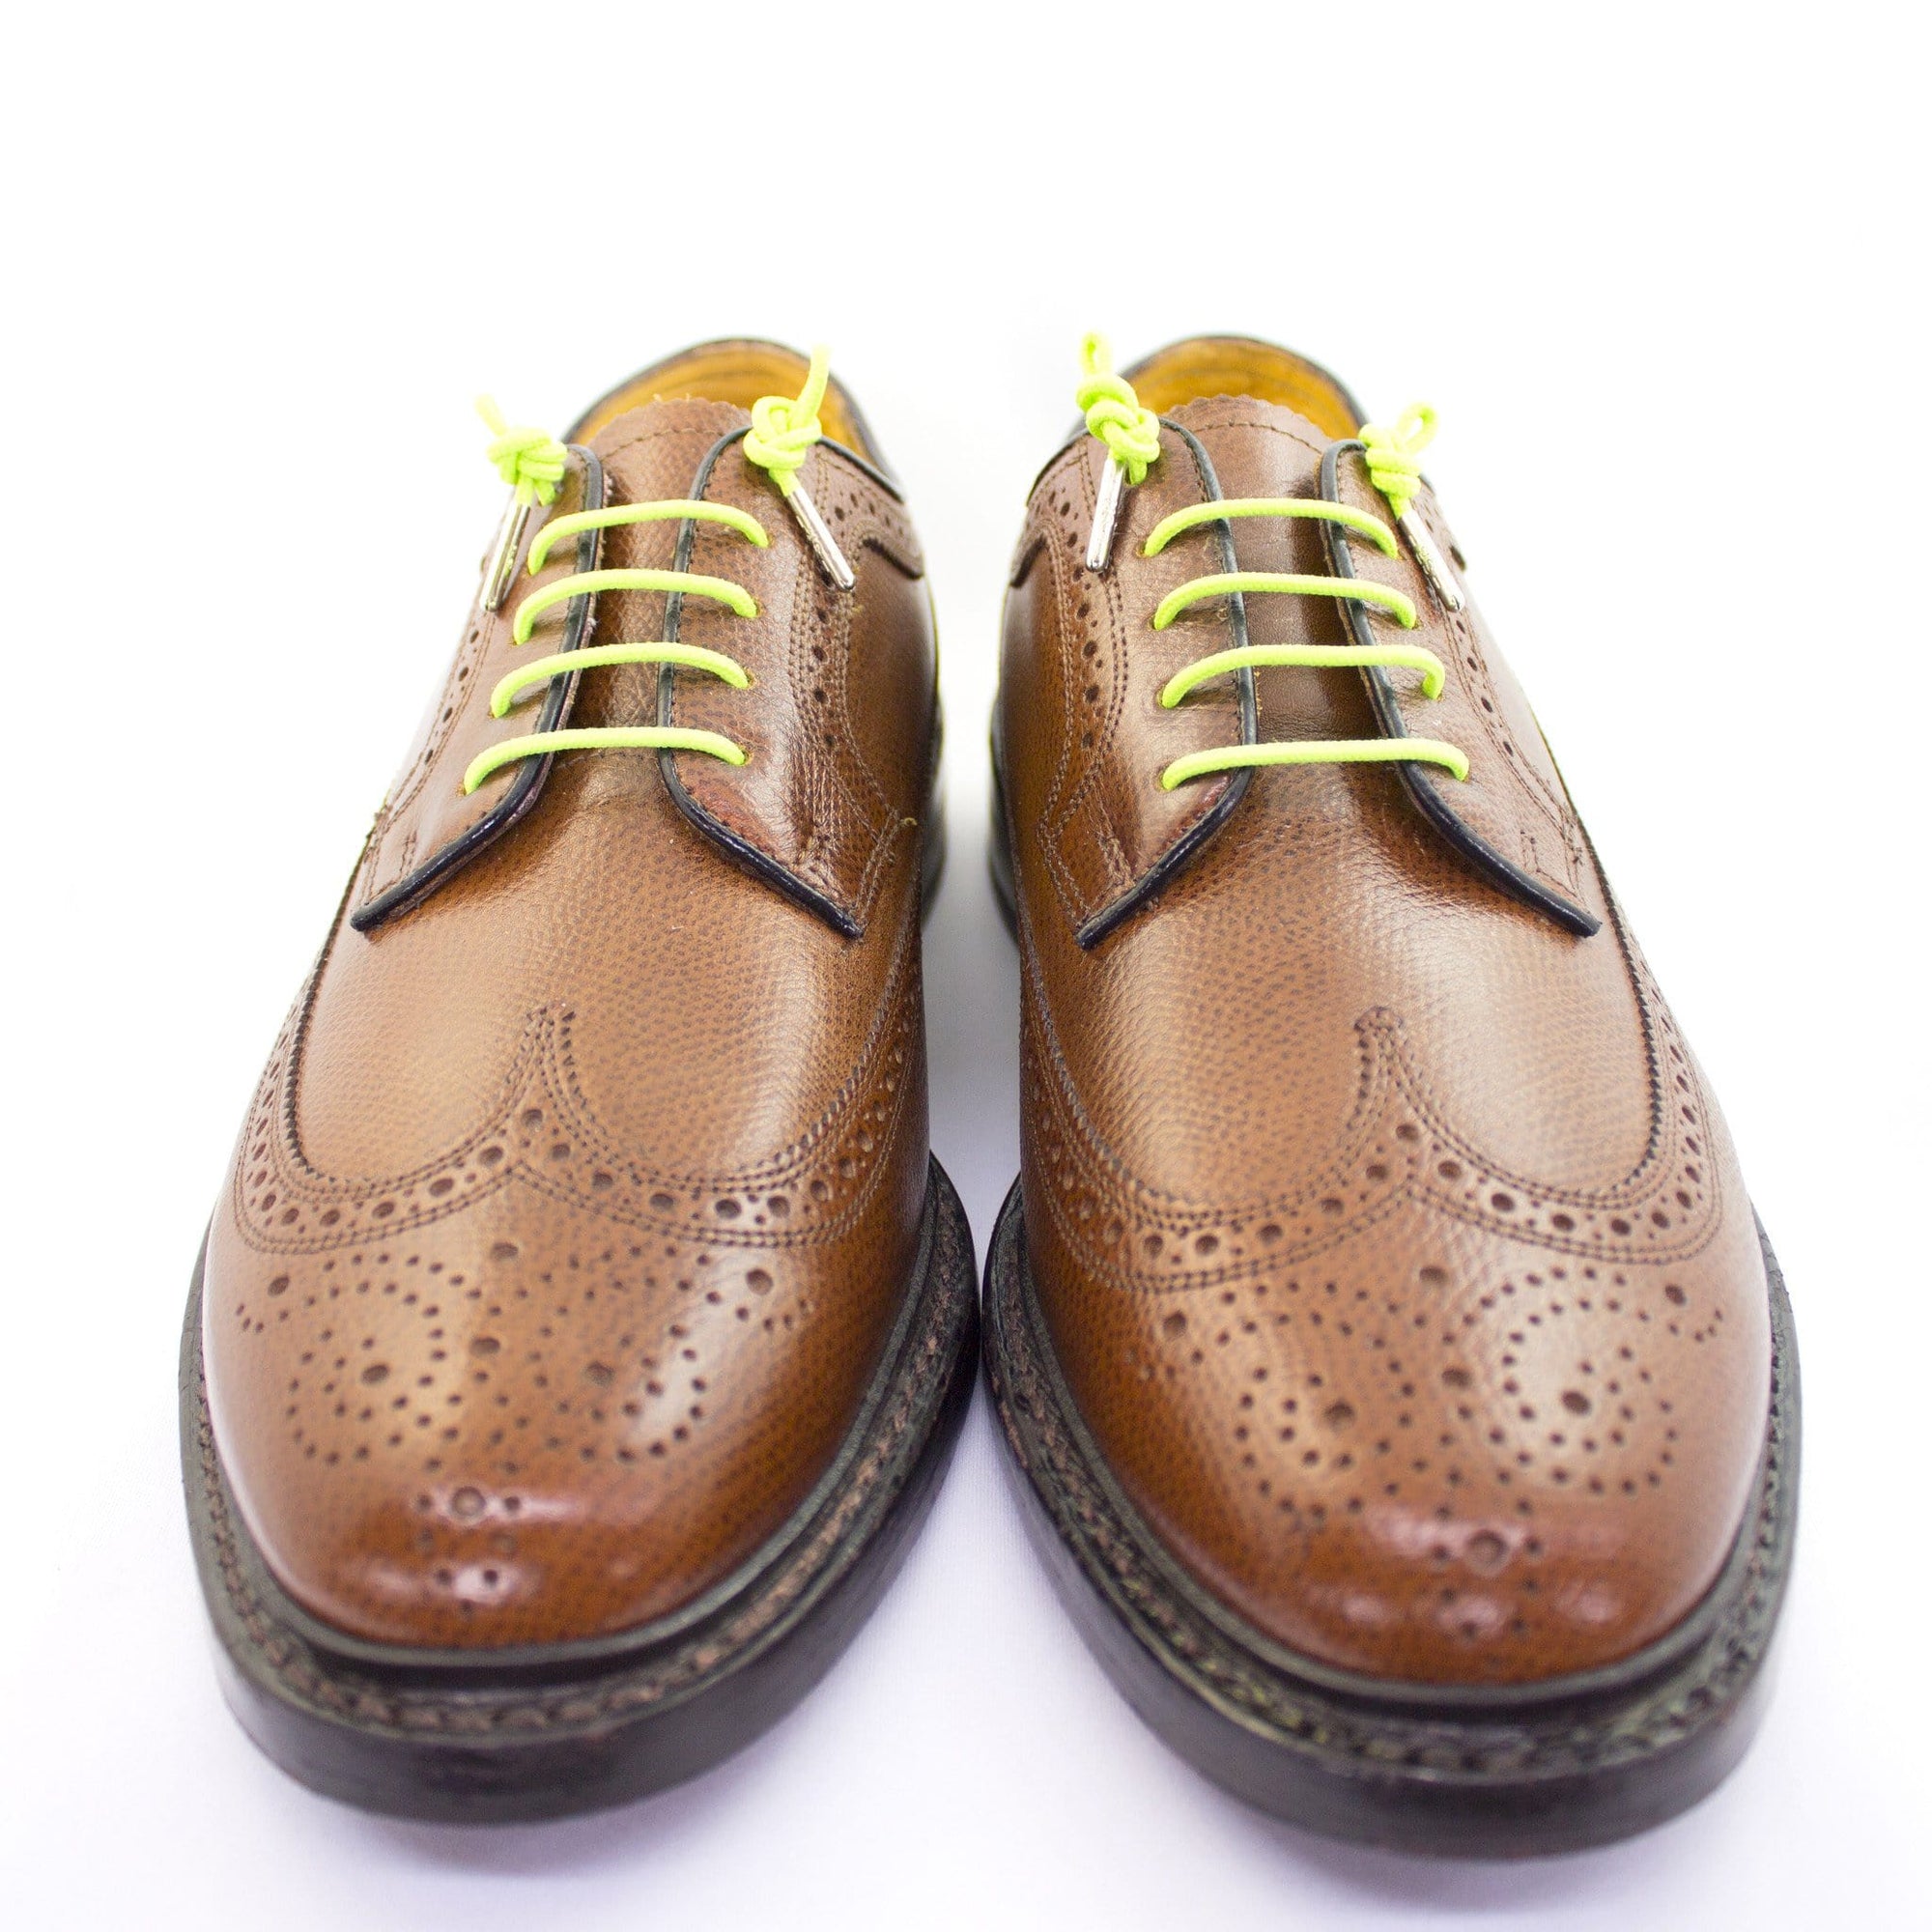 Neon green laces for dress shoes, Length: 32"/81cm-Stolen Riches